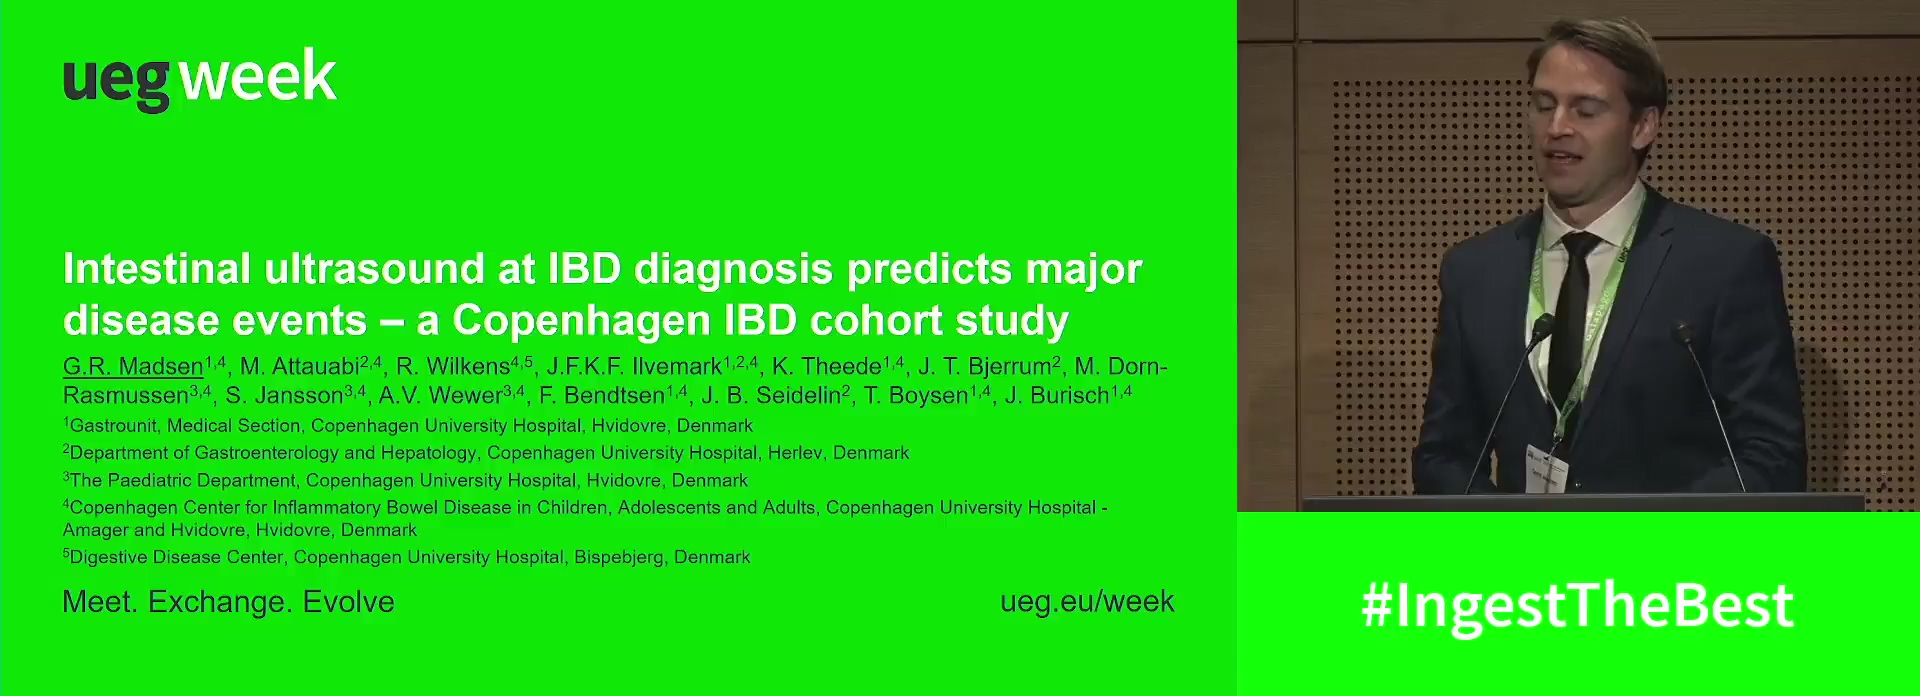 INTESTINAL ULTRASOUND AT IBD DIAGNOSIS PREDICTS MAJOR DISEASE EVENTS – A COPENHAGEN IBD COHORT STUDY